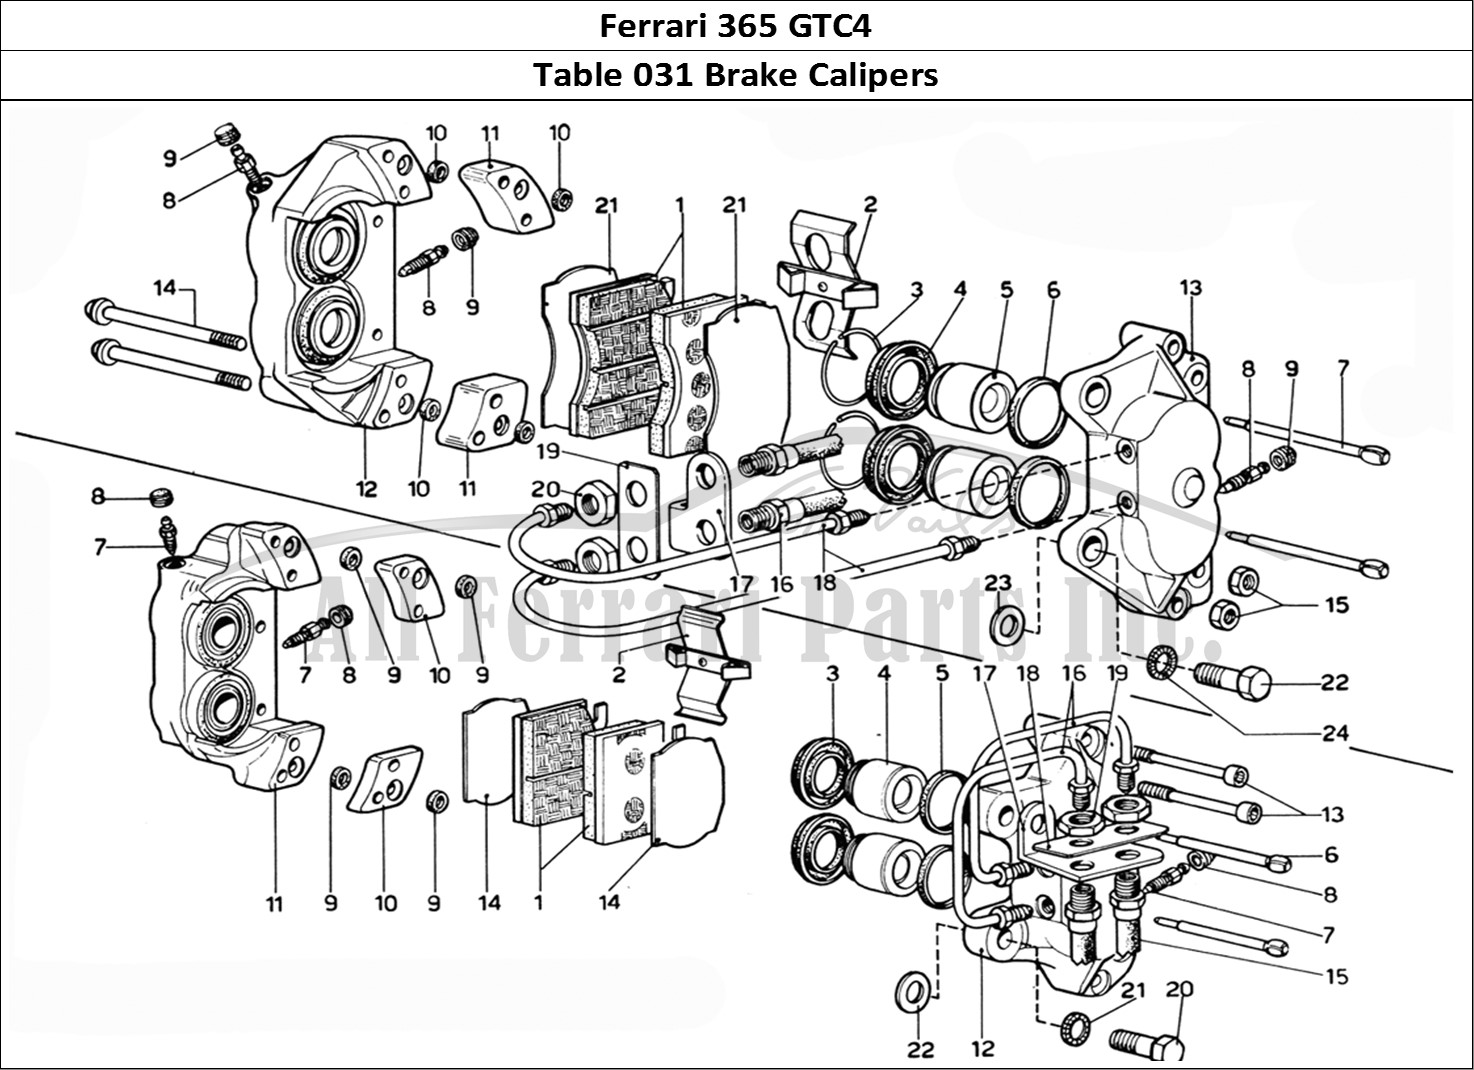 Ferrari Parts Ferrari 365 GTC4 (Mechanical) Page 031 Front & Rear brake calipe